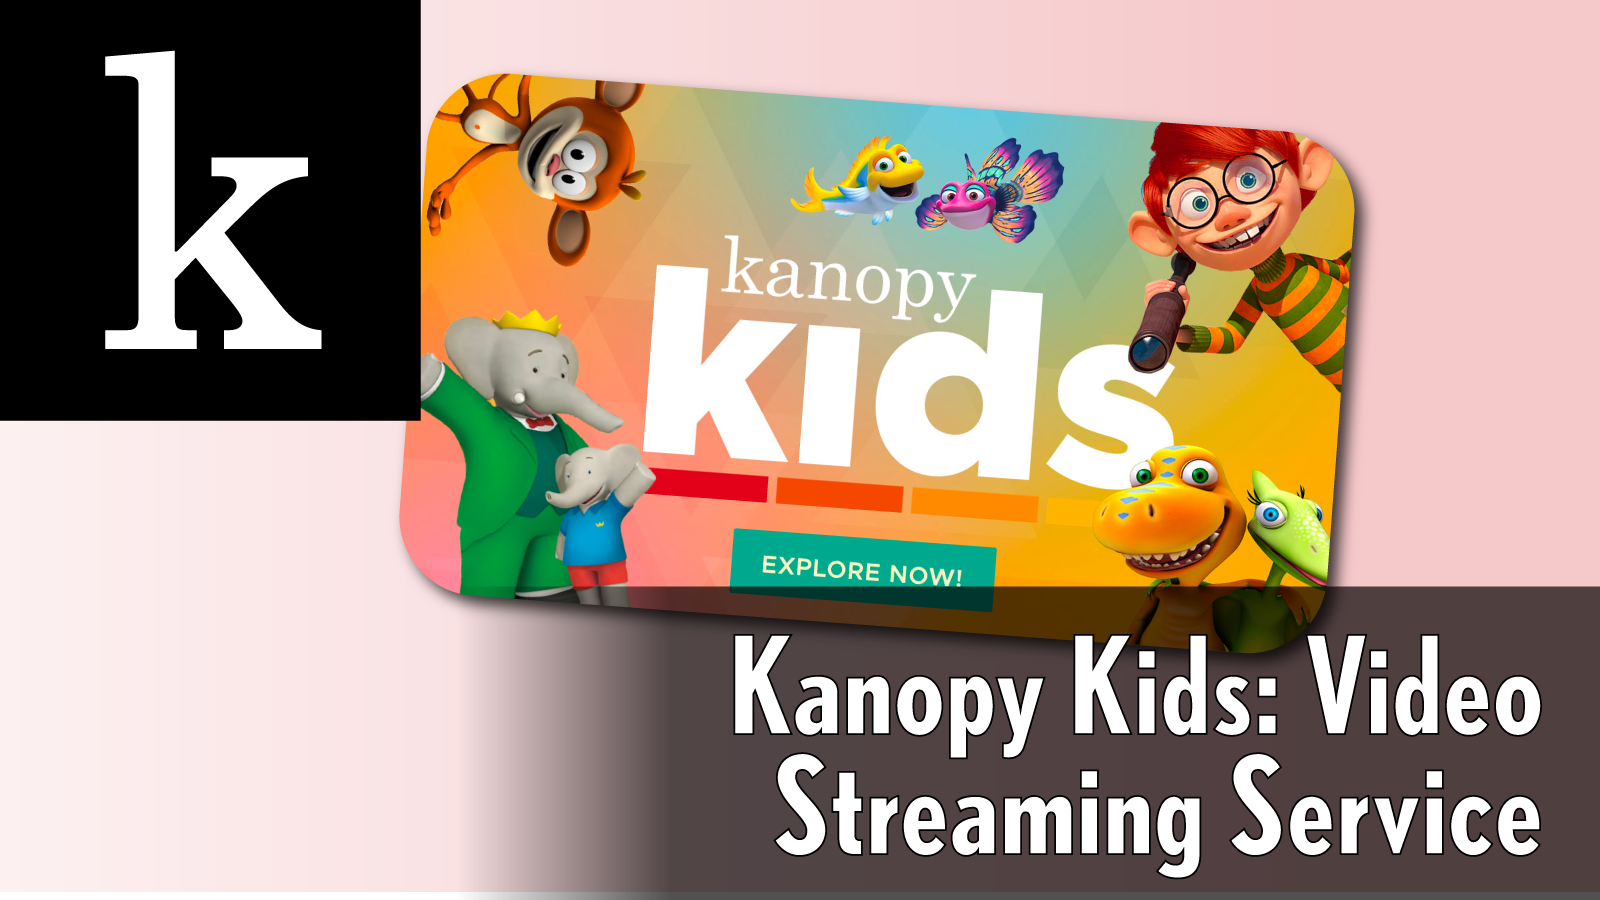 Kanopy Kids: Video Streaming Service